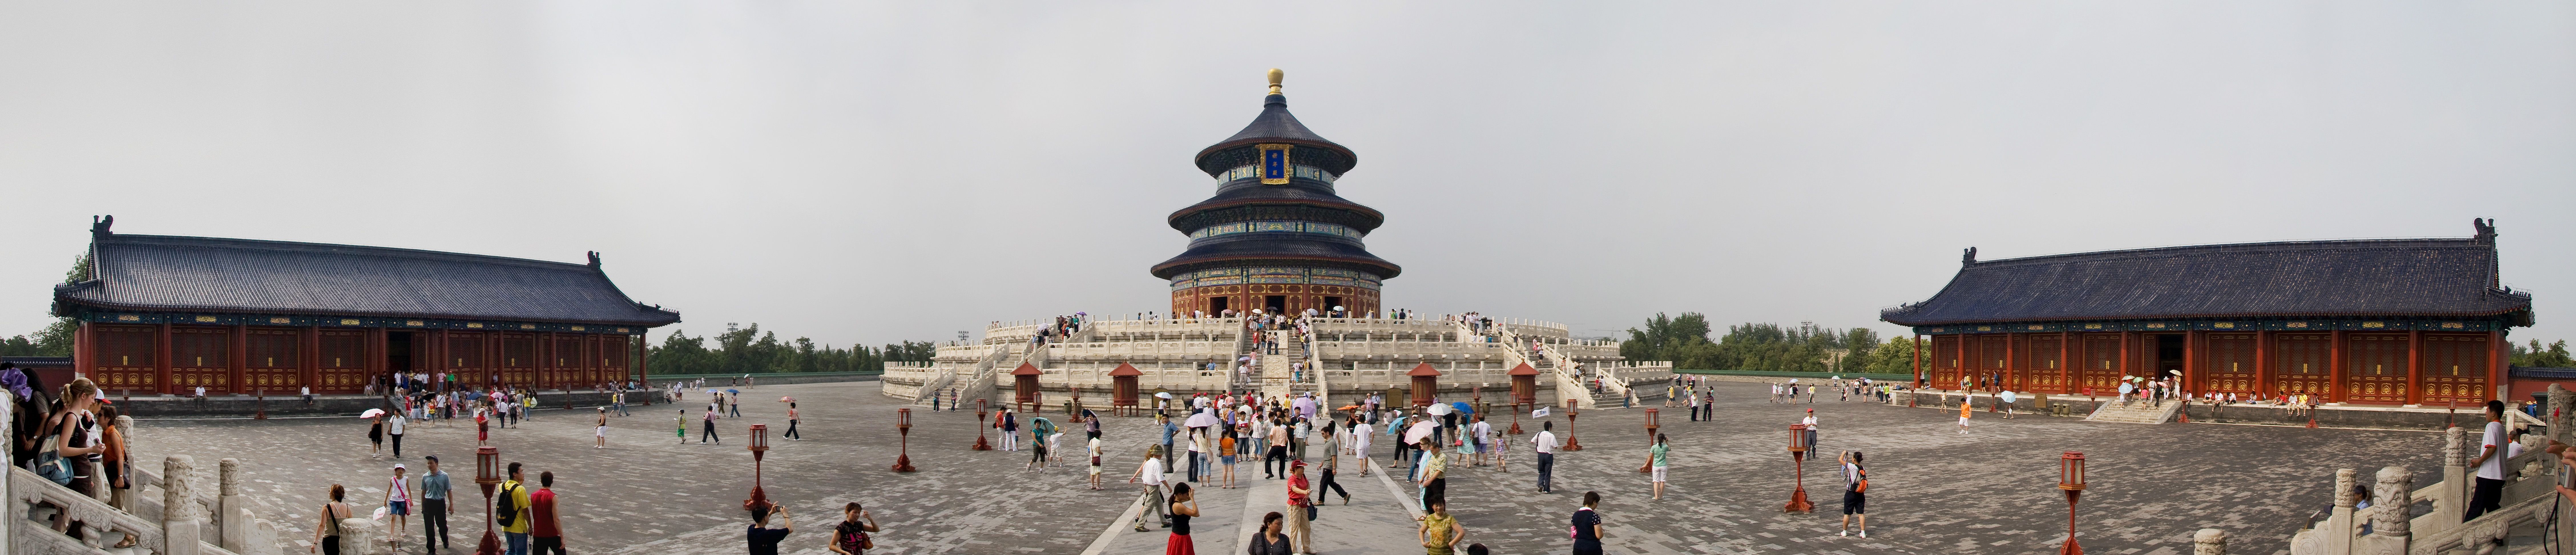 El Templo del Cielo,天坛 | Běijīng, 北京 | Pinterest | Beijing china ...